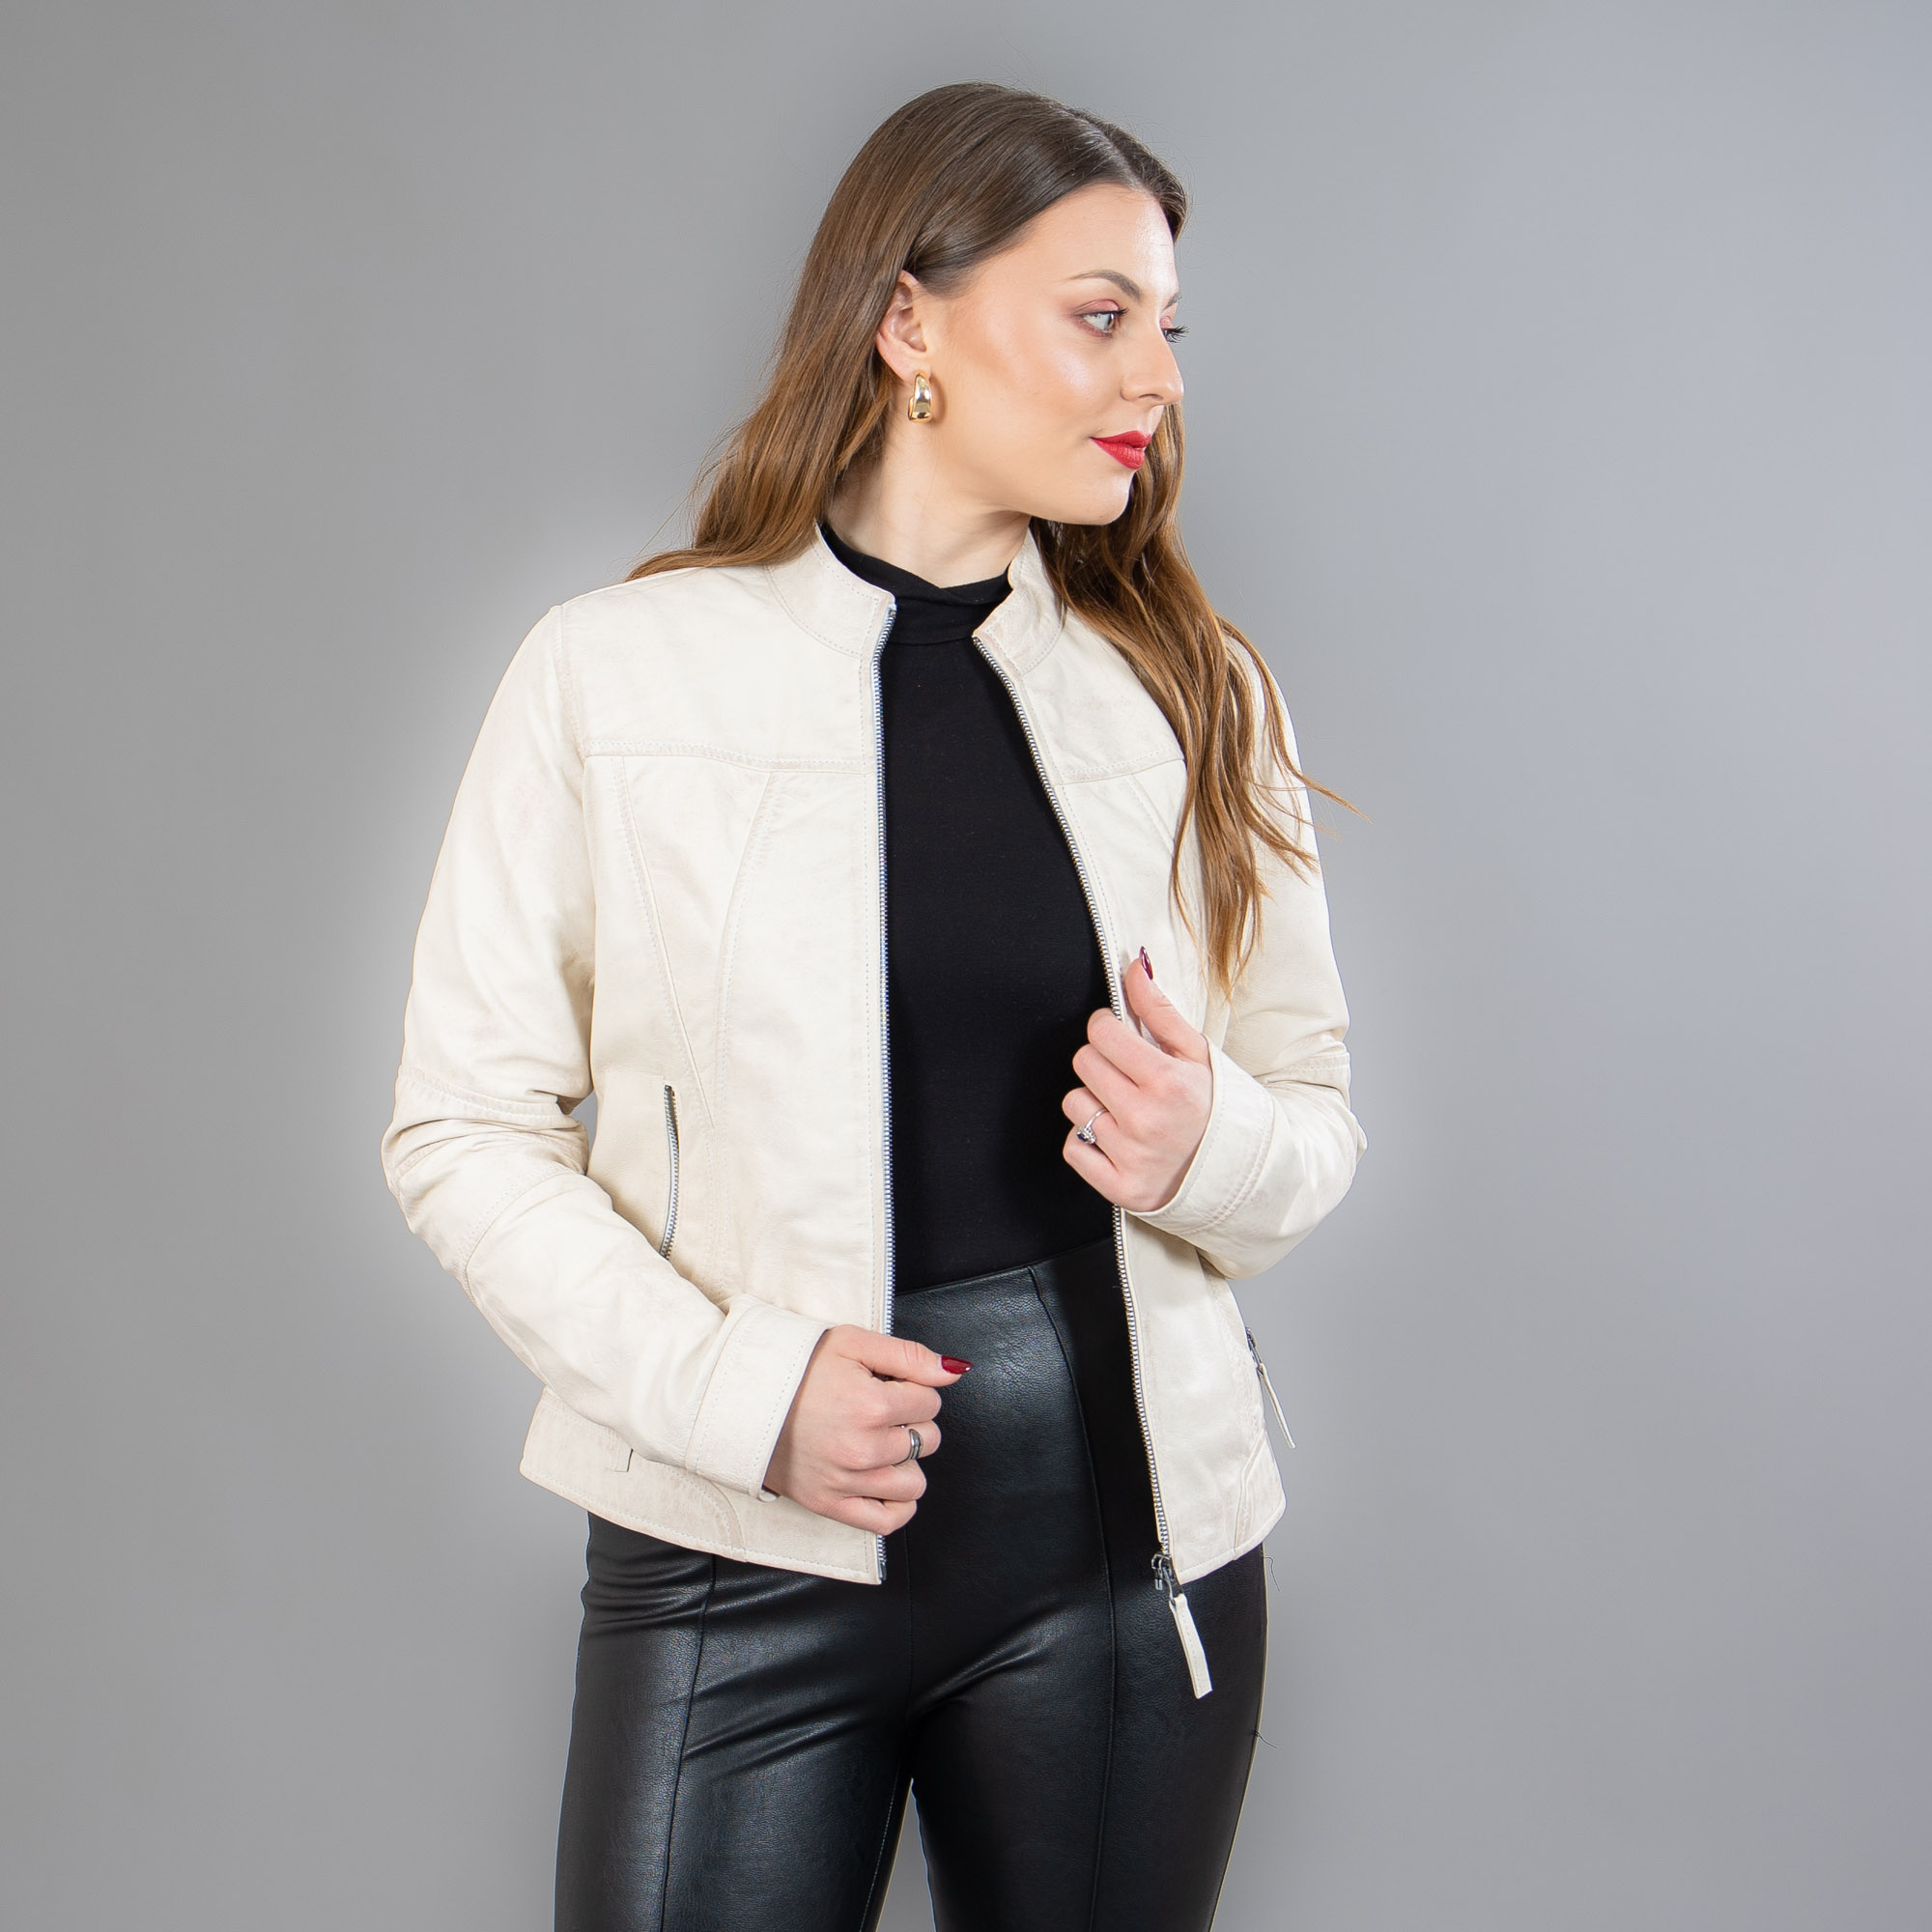 Beige leather jacket